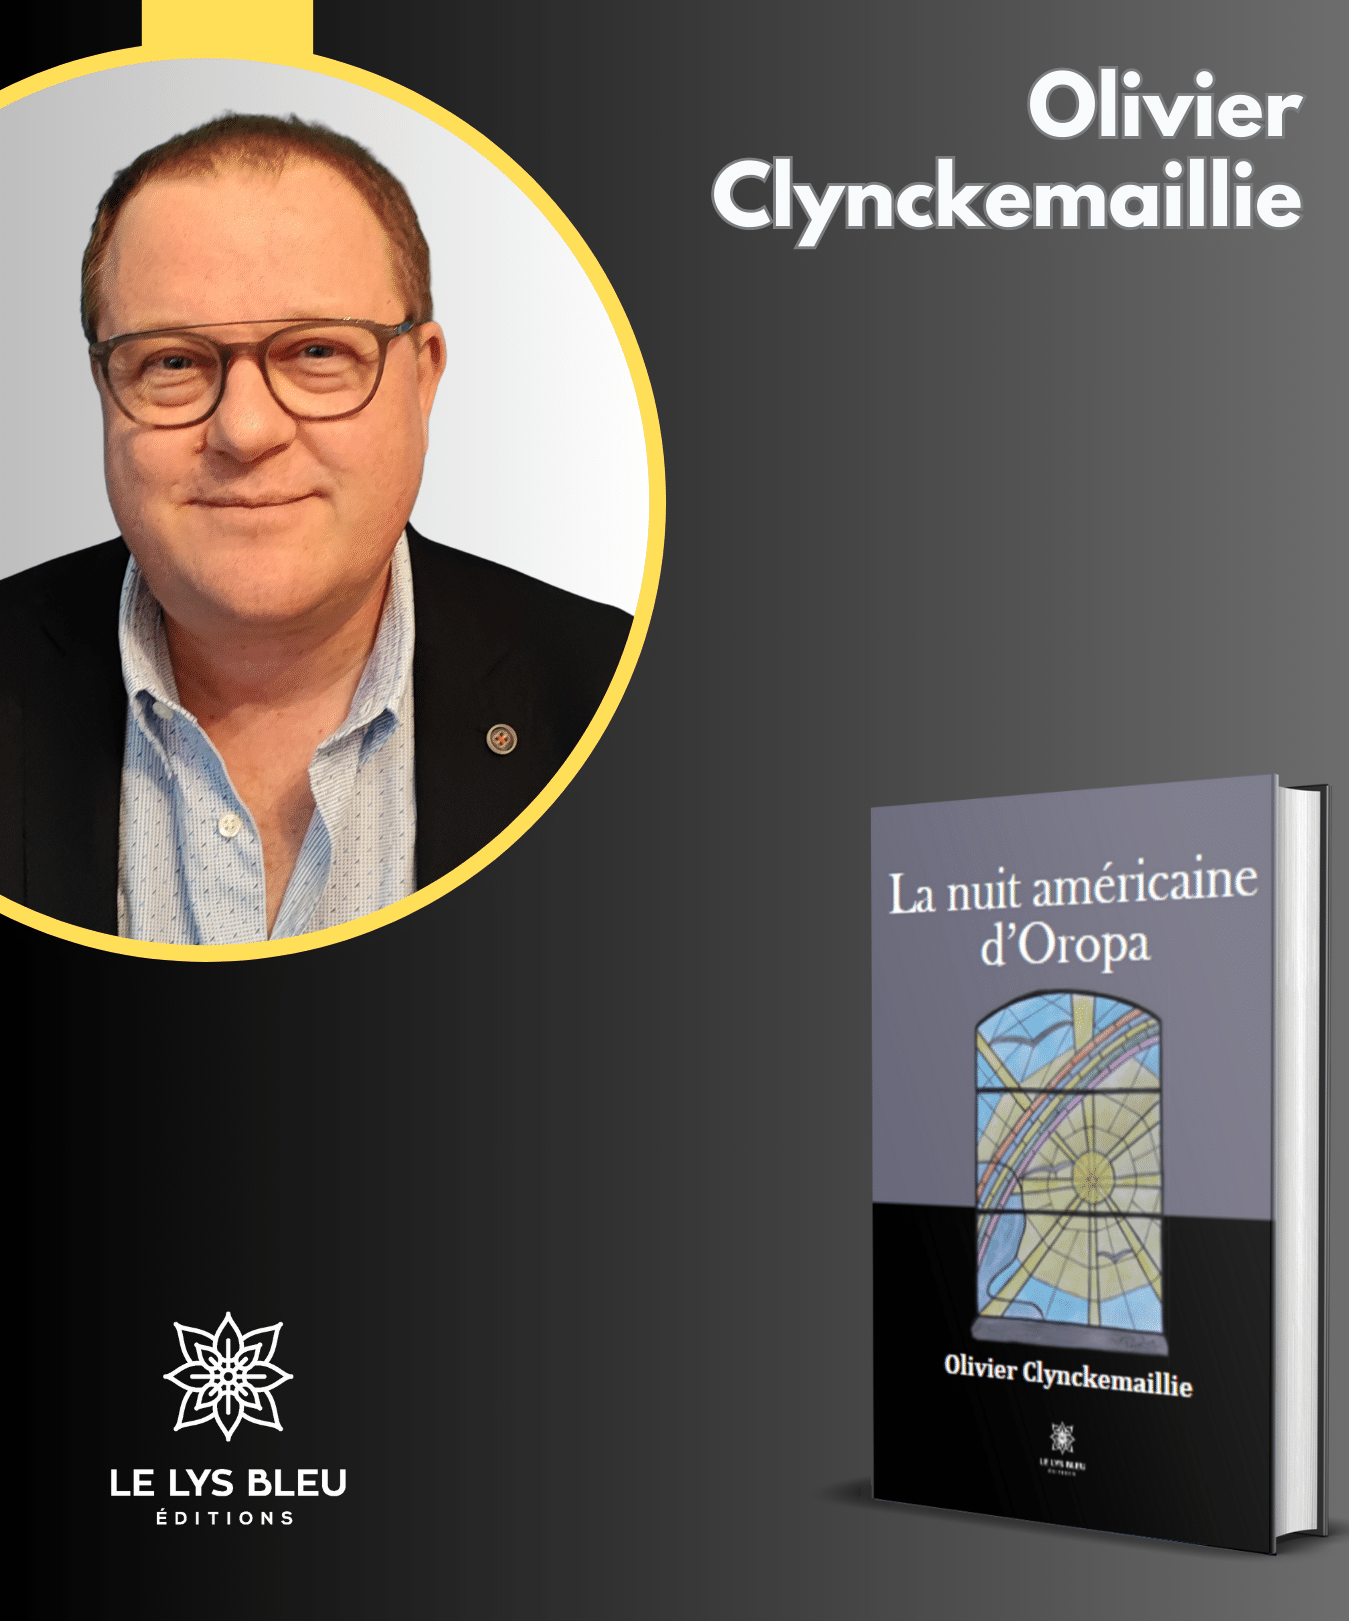 Olivier Clynckemaillie